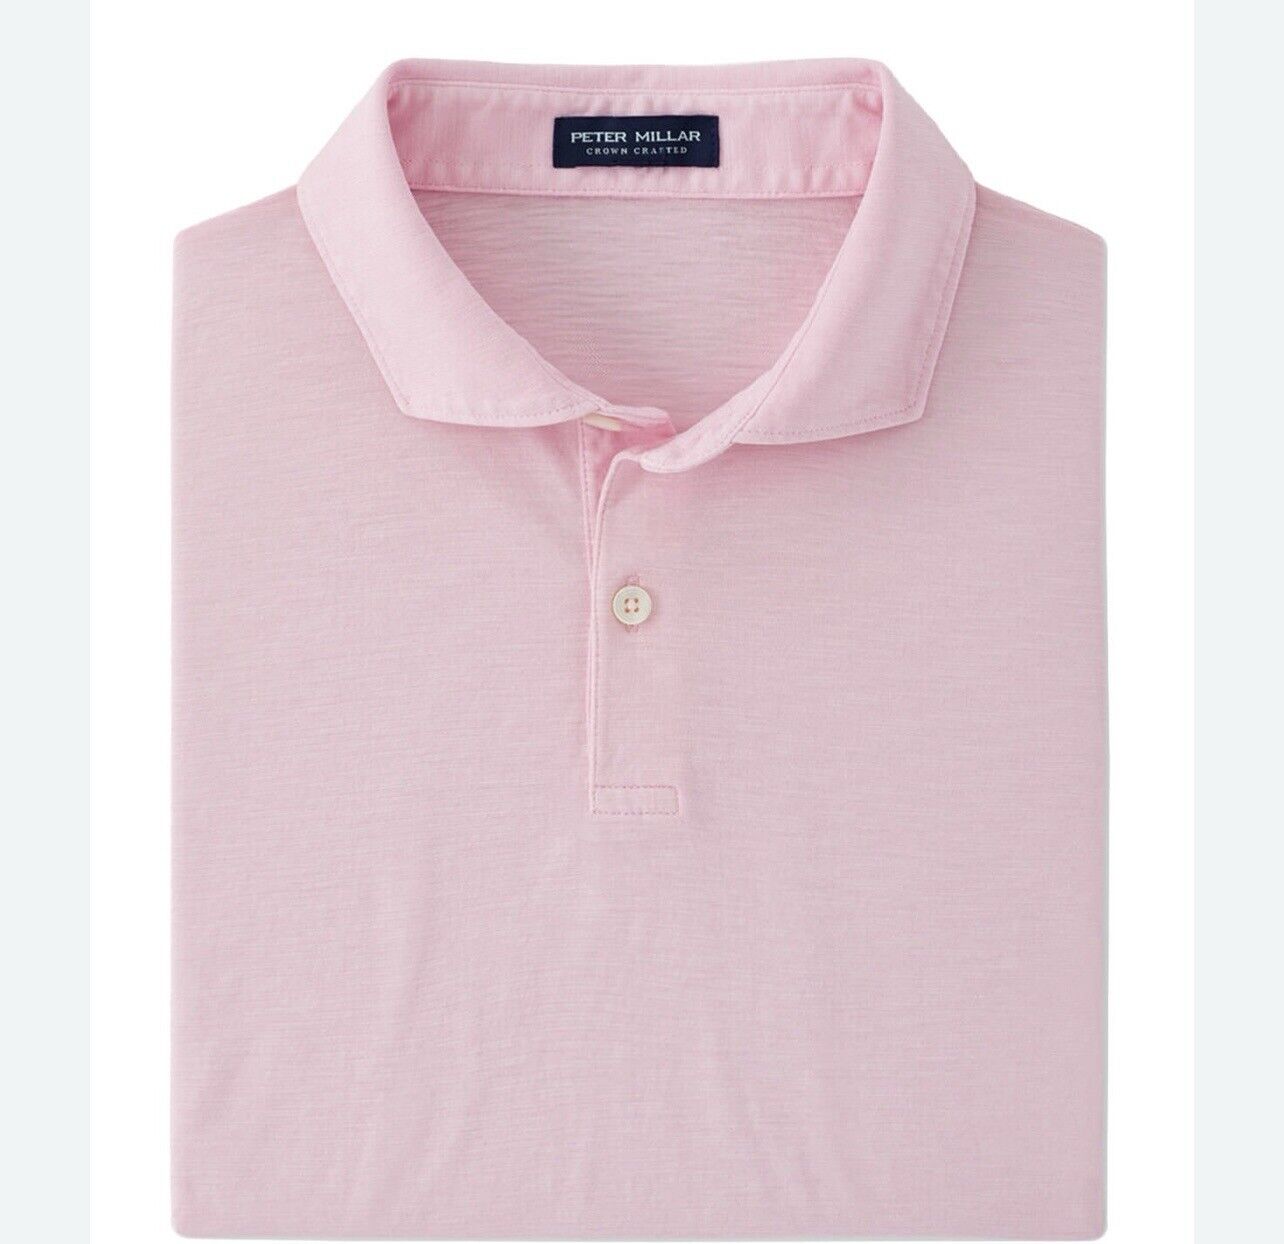 PETER MILLAR Crown Crafted Journeyman Polo Shirt Pink Pima Cotton Sz L NWT Golf